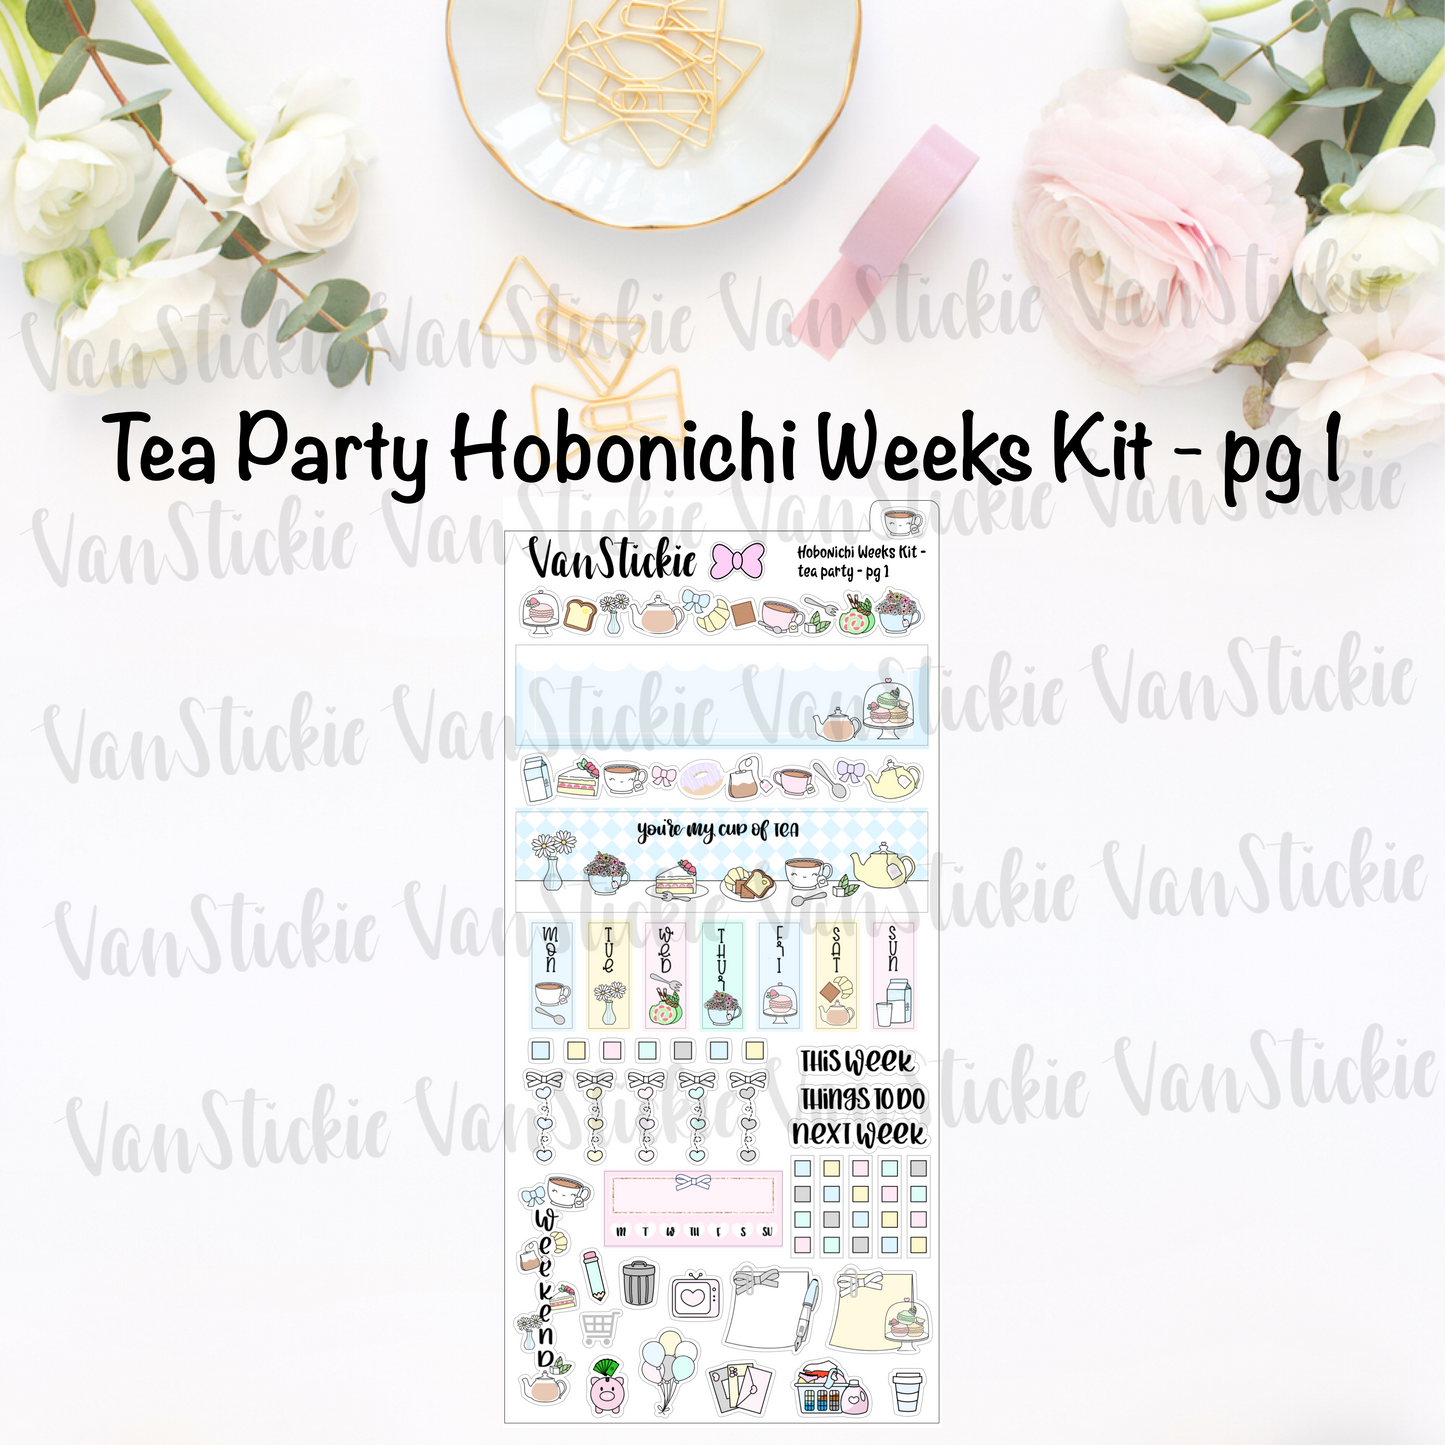 Hobonichi Weeks Kit - "Tea Party"